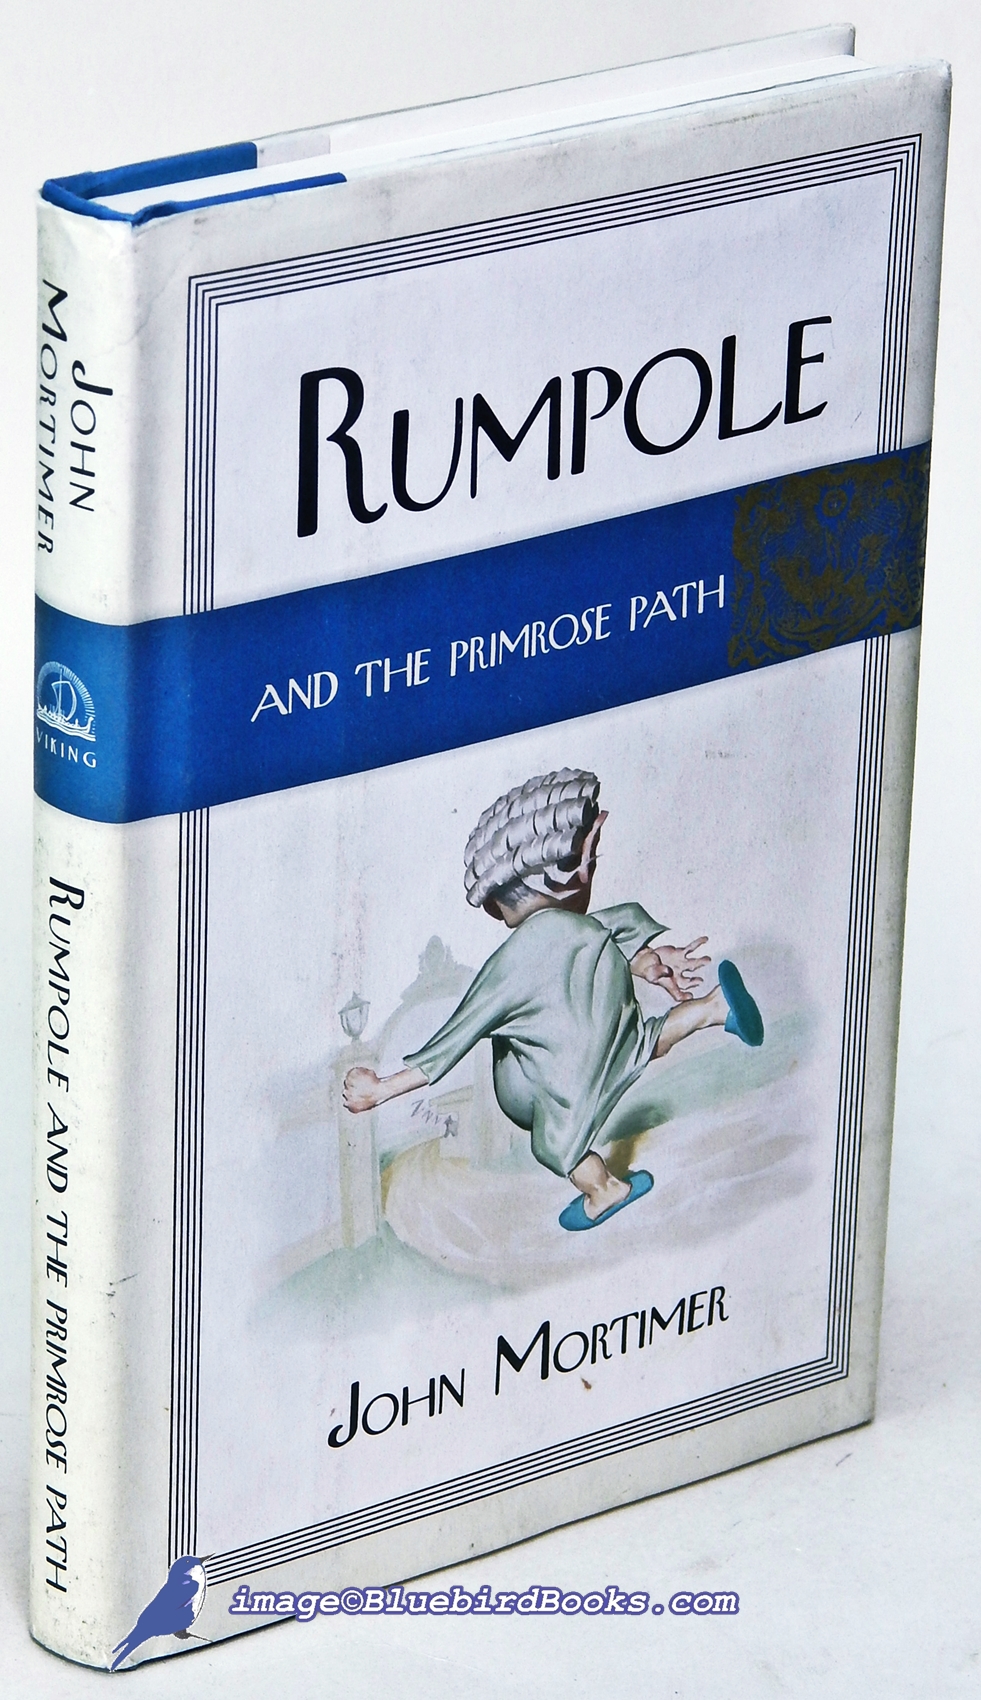 MORTIMER, JOHN - Rumpole and the Primrose Path